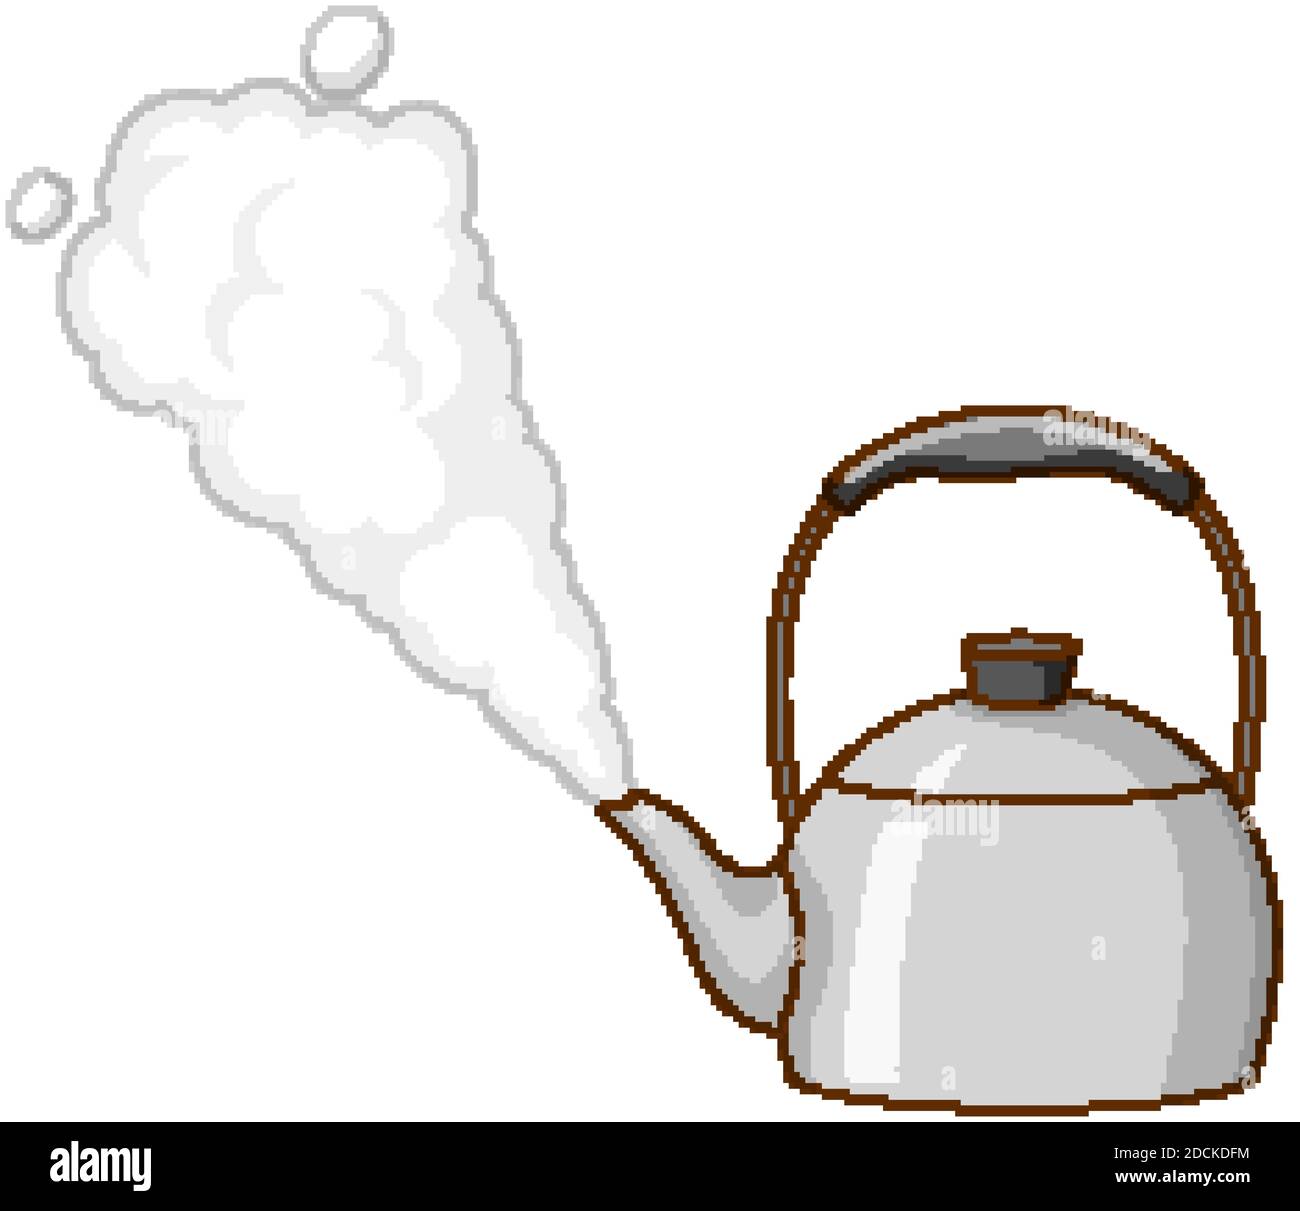 https://c8.alamy.com/comp/2DCKDFM/boiling-kettle-on-white-background-illustration-2DCKDFM.jpg